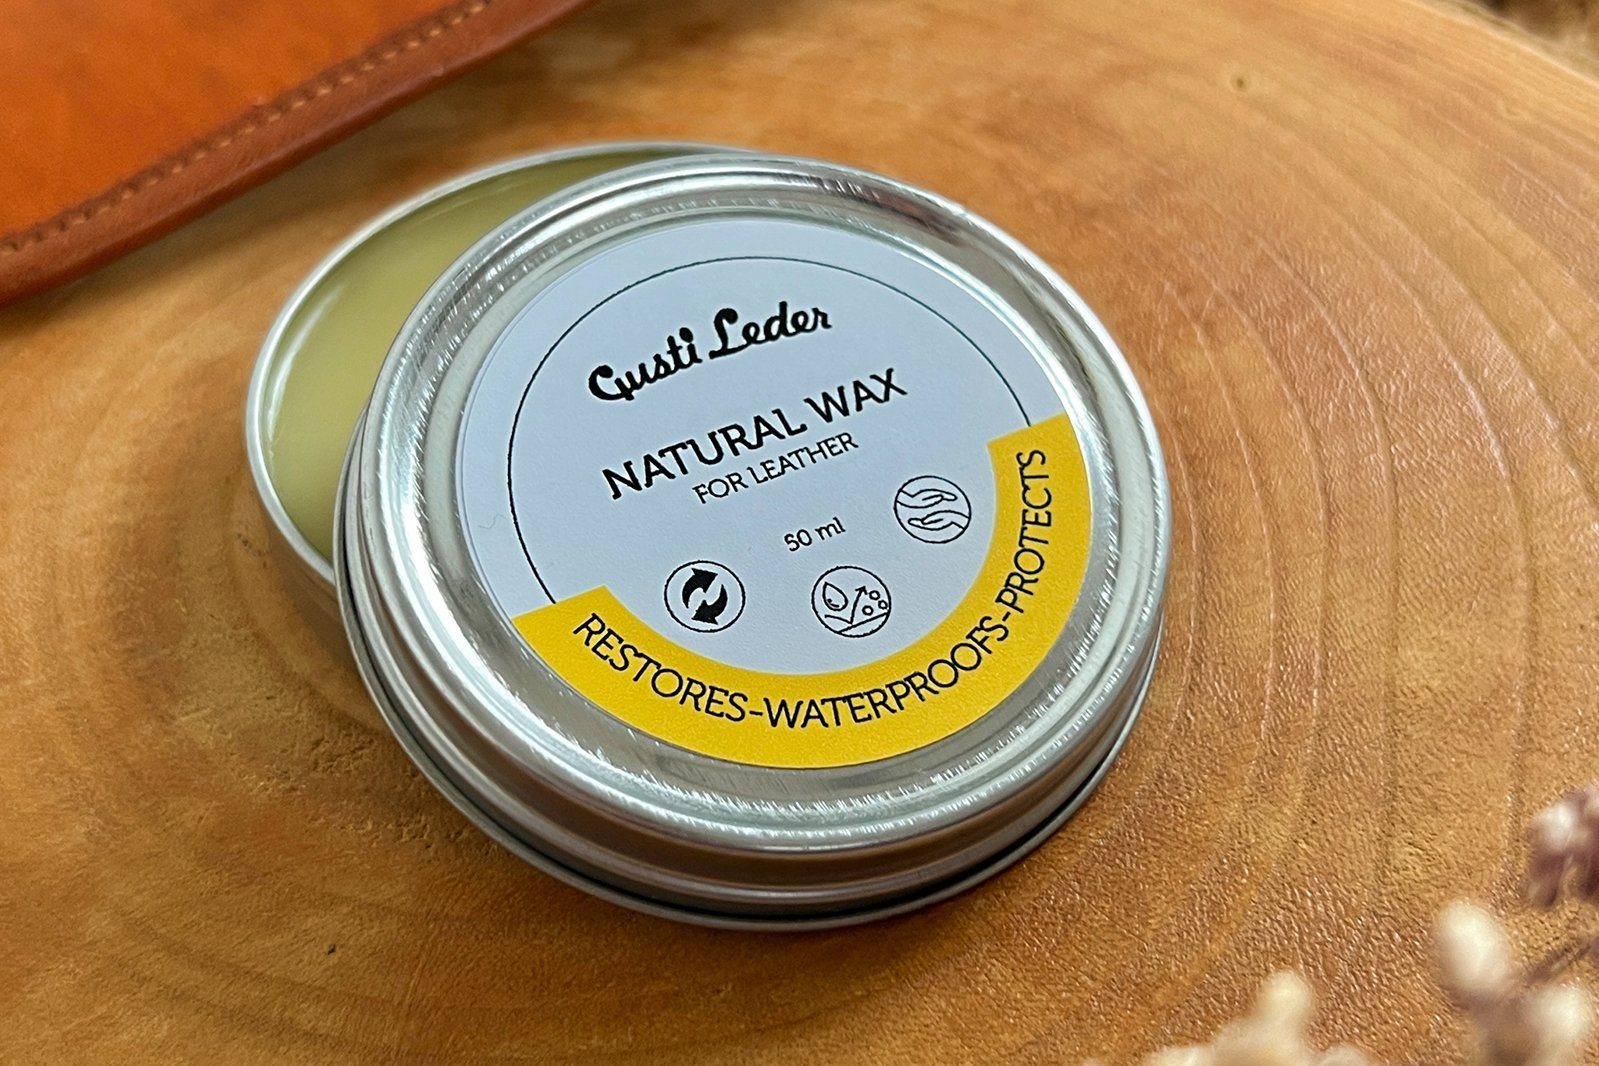 Gusti Leder Natural Beeswax Lederpflege 1 St) (Bienenwachs